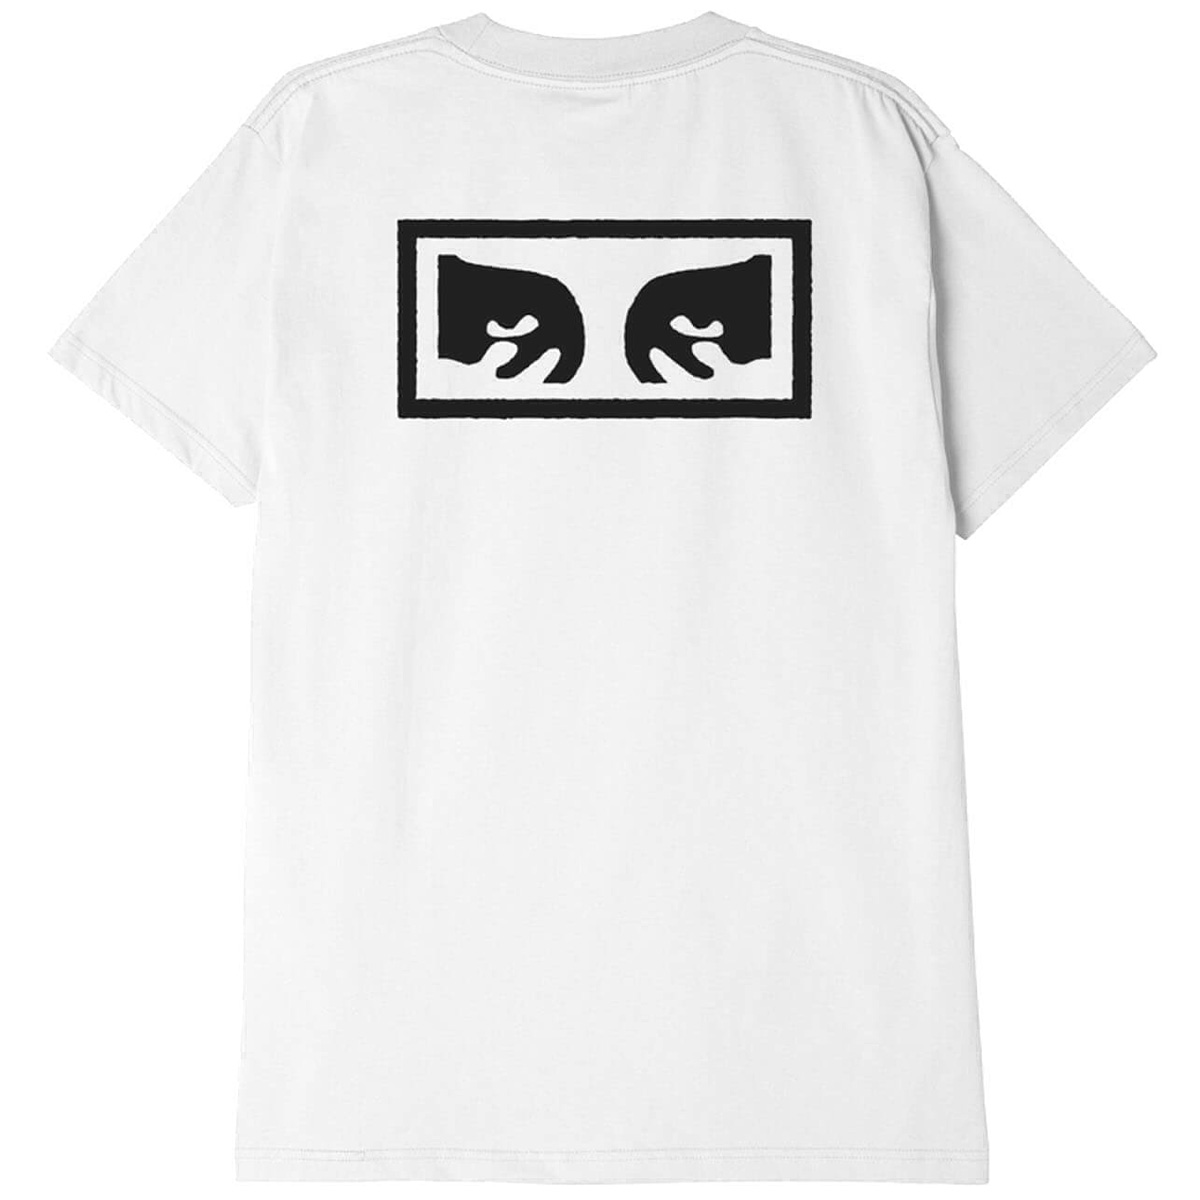 Obey Eyes 3 T-Shirt White